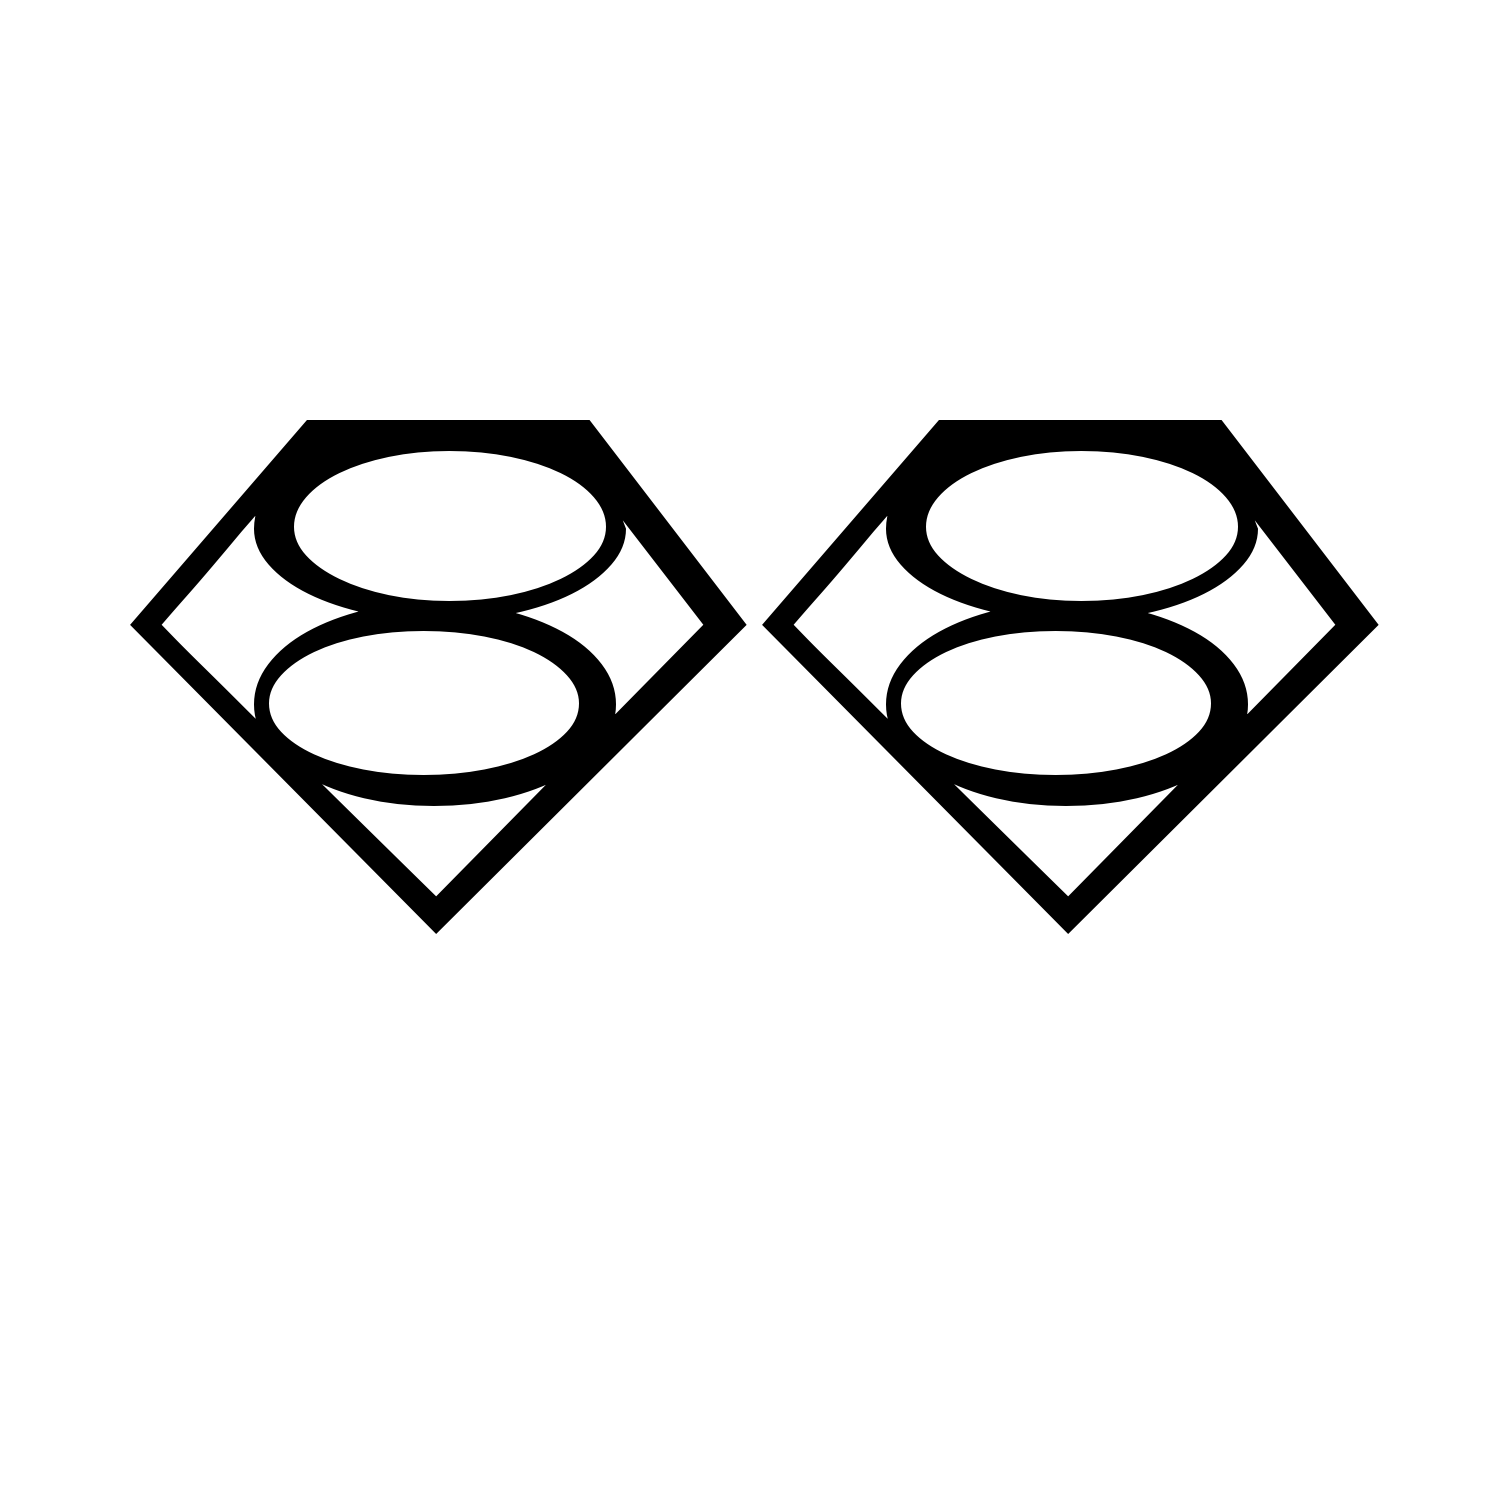 krypton symbol